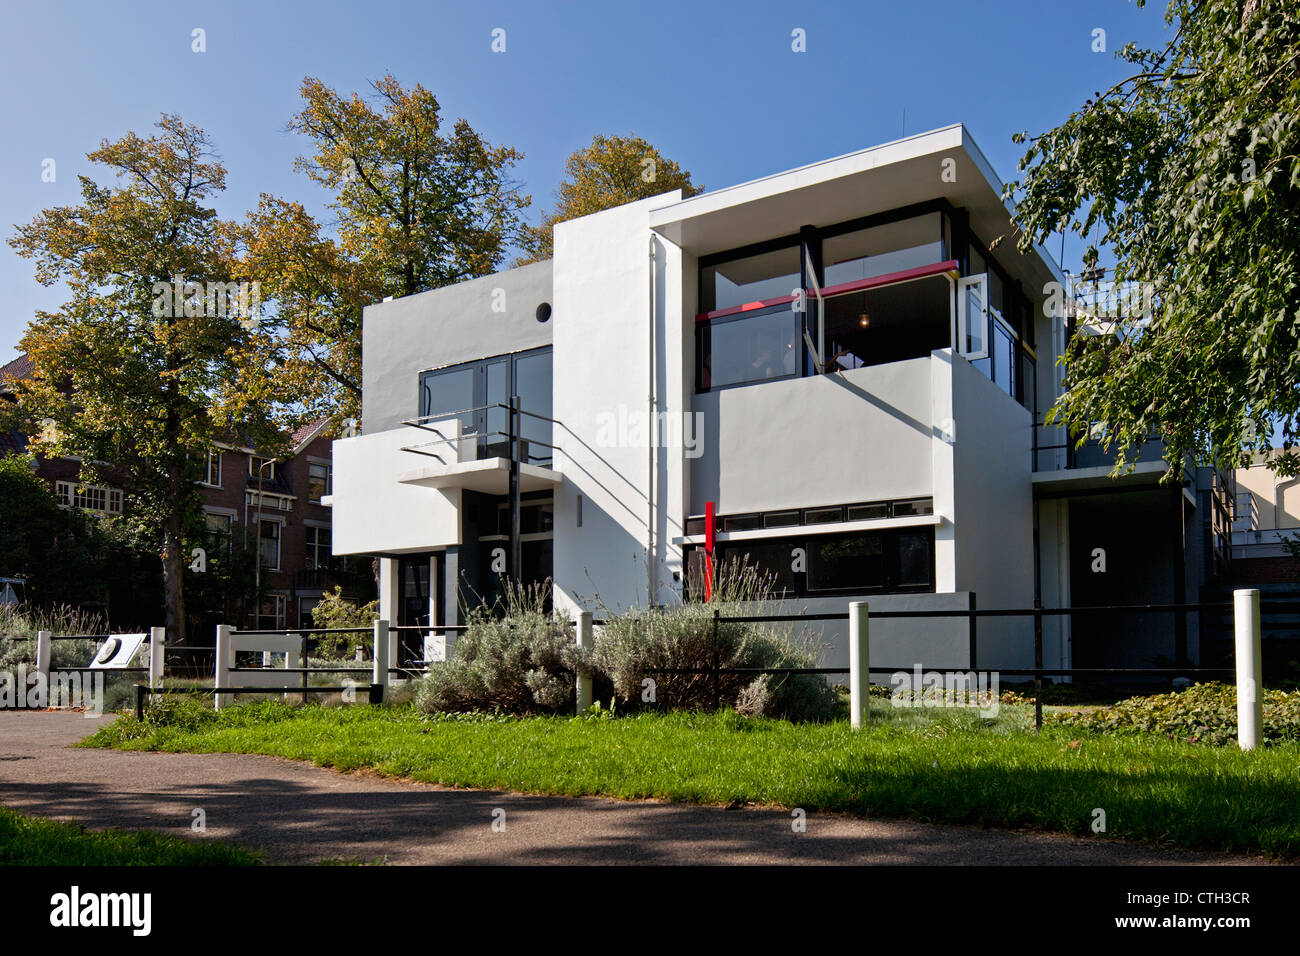 The Netherlands, Utrecht, Rietveld Schrosder house. UNESCO World Heritage Site. Stock Photo